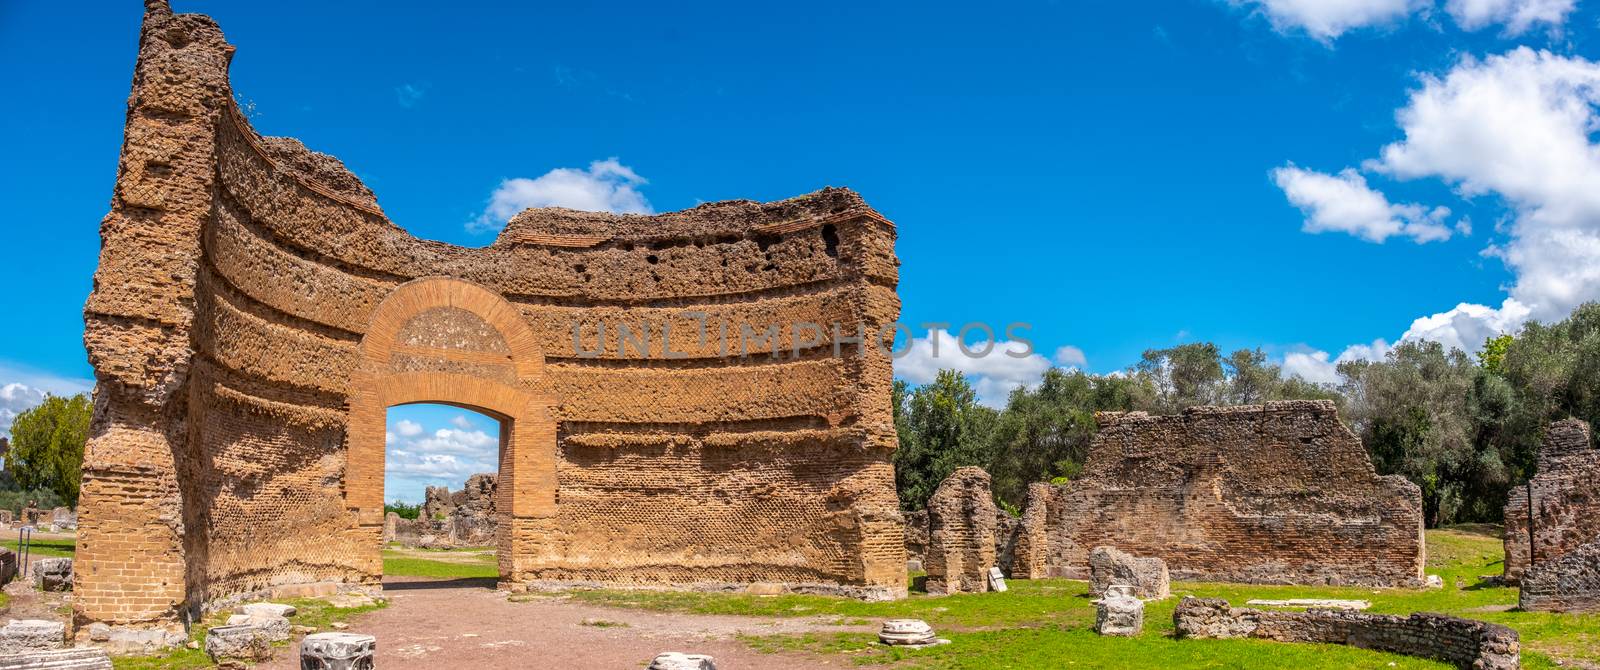 roman ruins panoramic Villa Adriana in Tivoli Rome - Lazio - Italy crumbled gate of the Ninfeo palace by LucaLorenzelli